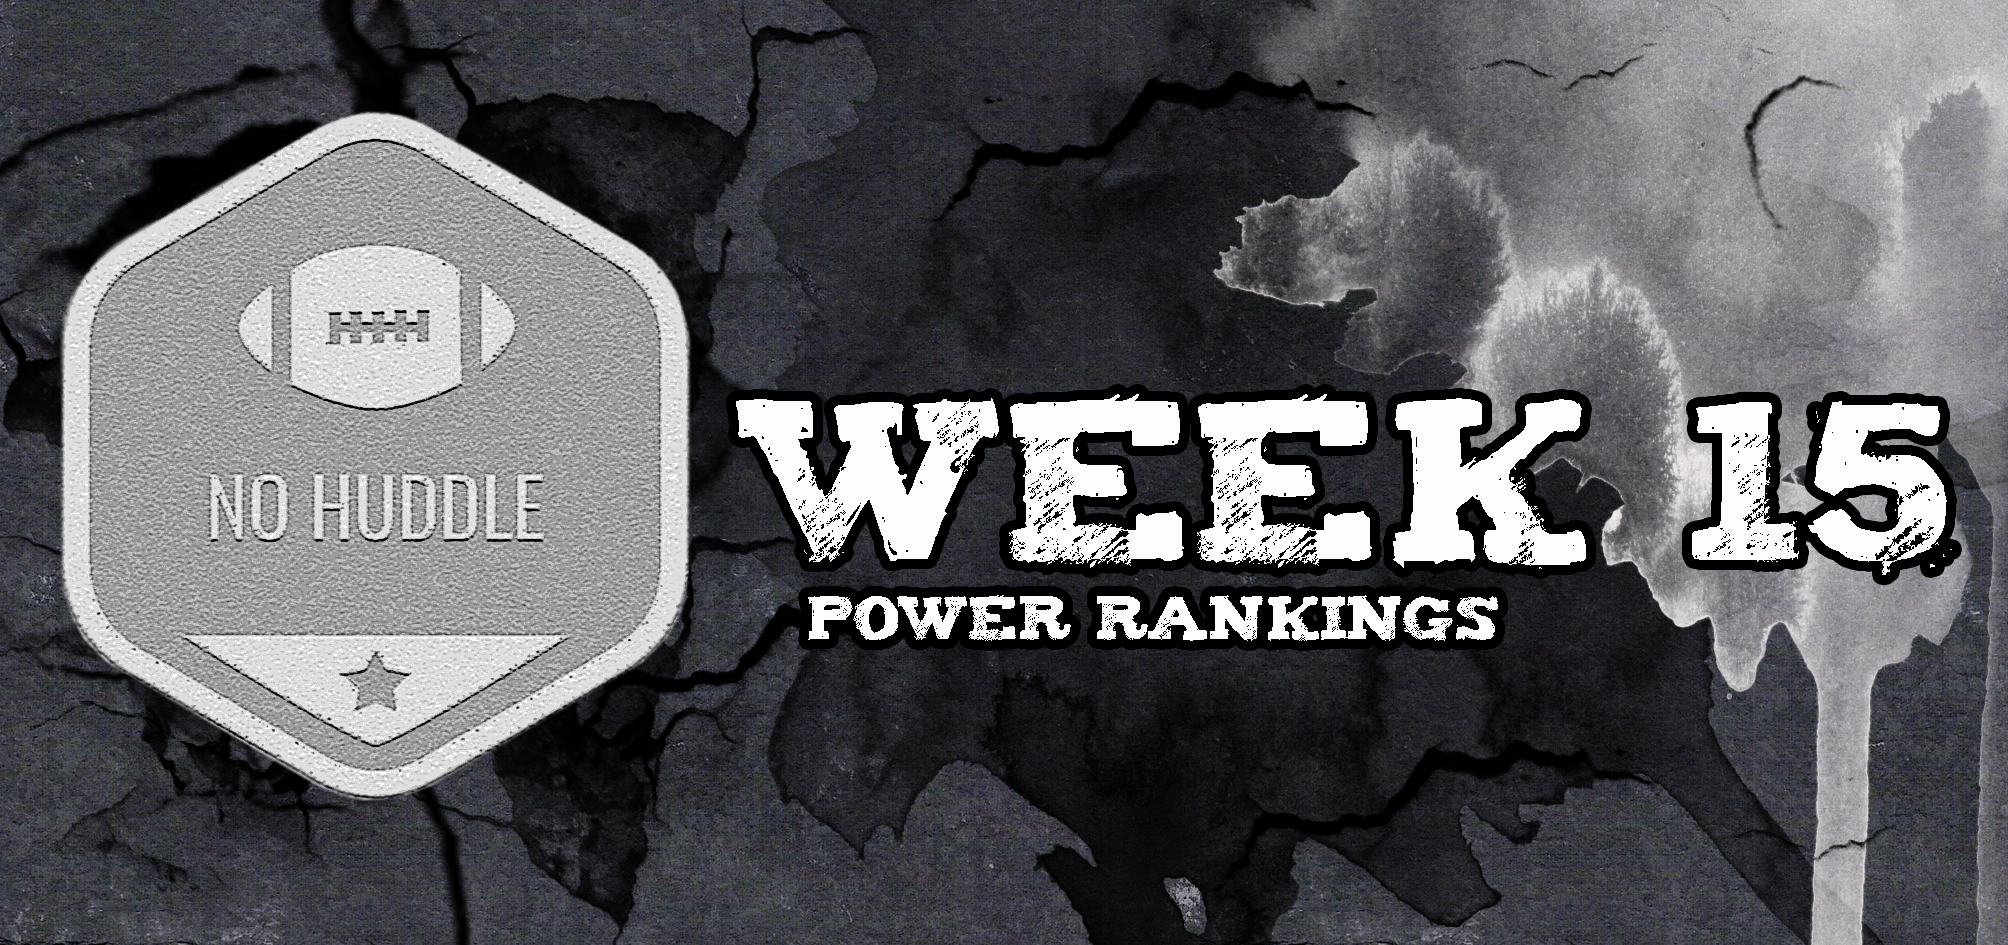 Power Rankings: Semana 15